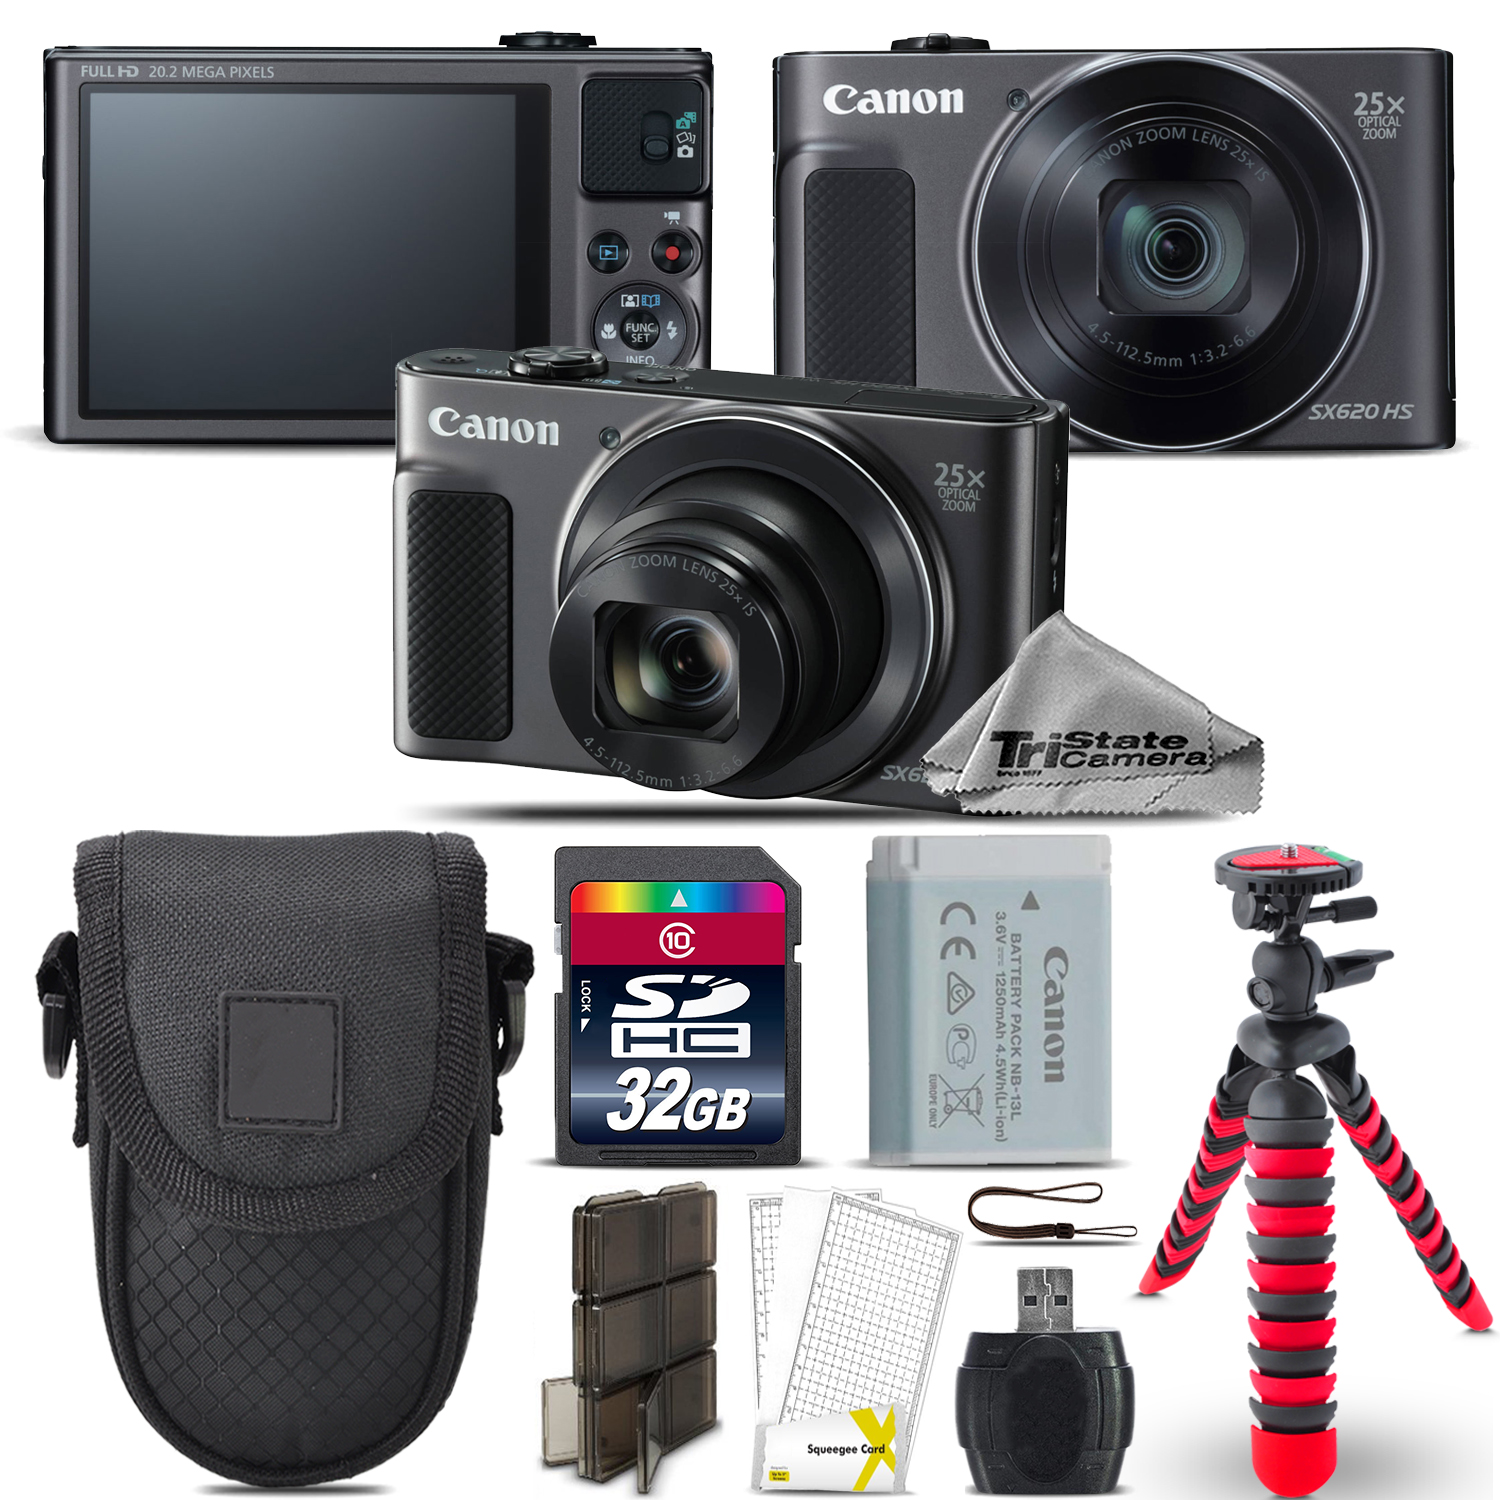 PowerShot SX620 HS Digital Camera Black + Spider Tripod + Case - 32GB Kit *FREE SHIPPING*